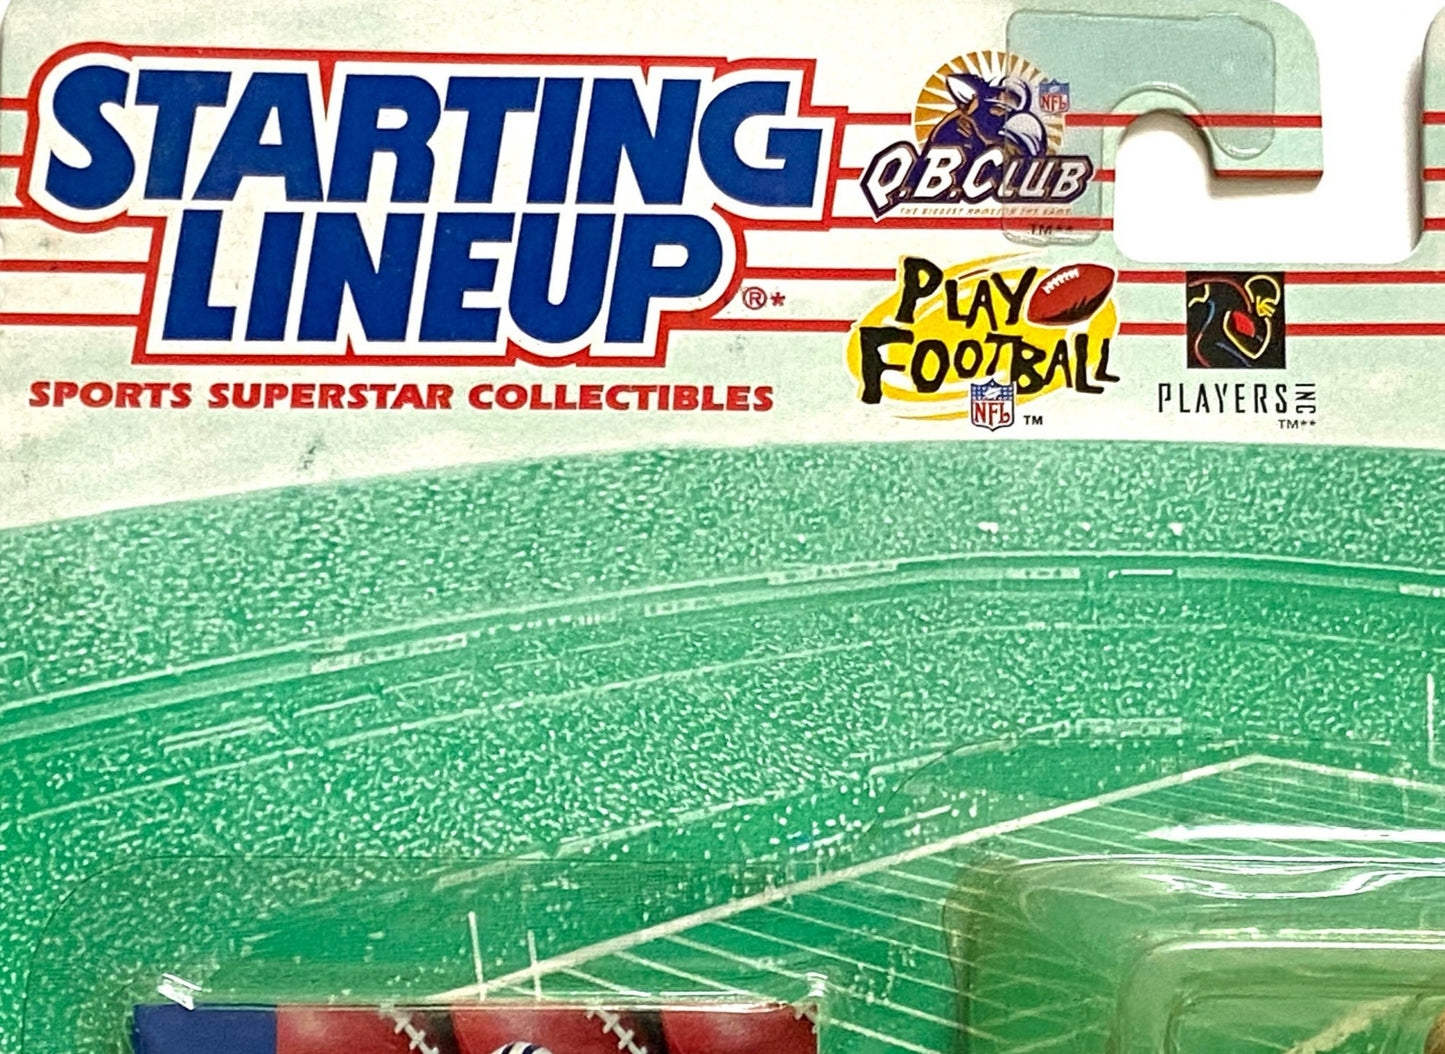 Kevin Greene 1997 Carolina Panthers NFL Starting Lineup Figurine NOS by Kenner